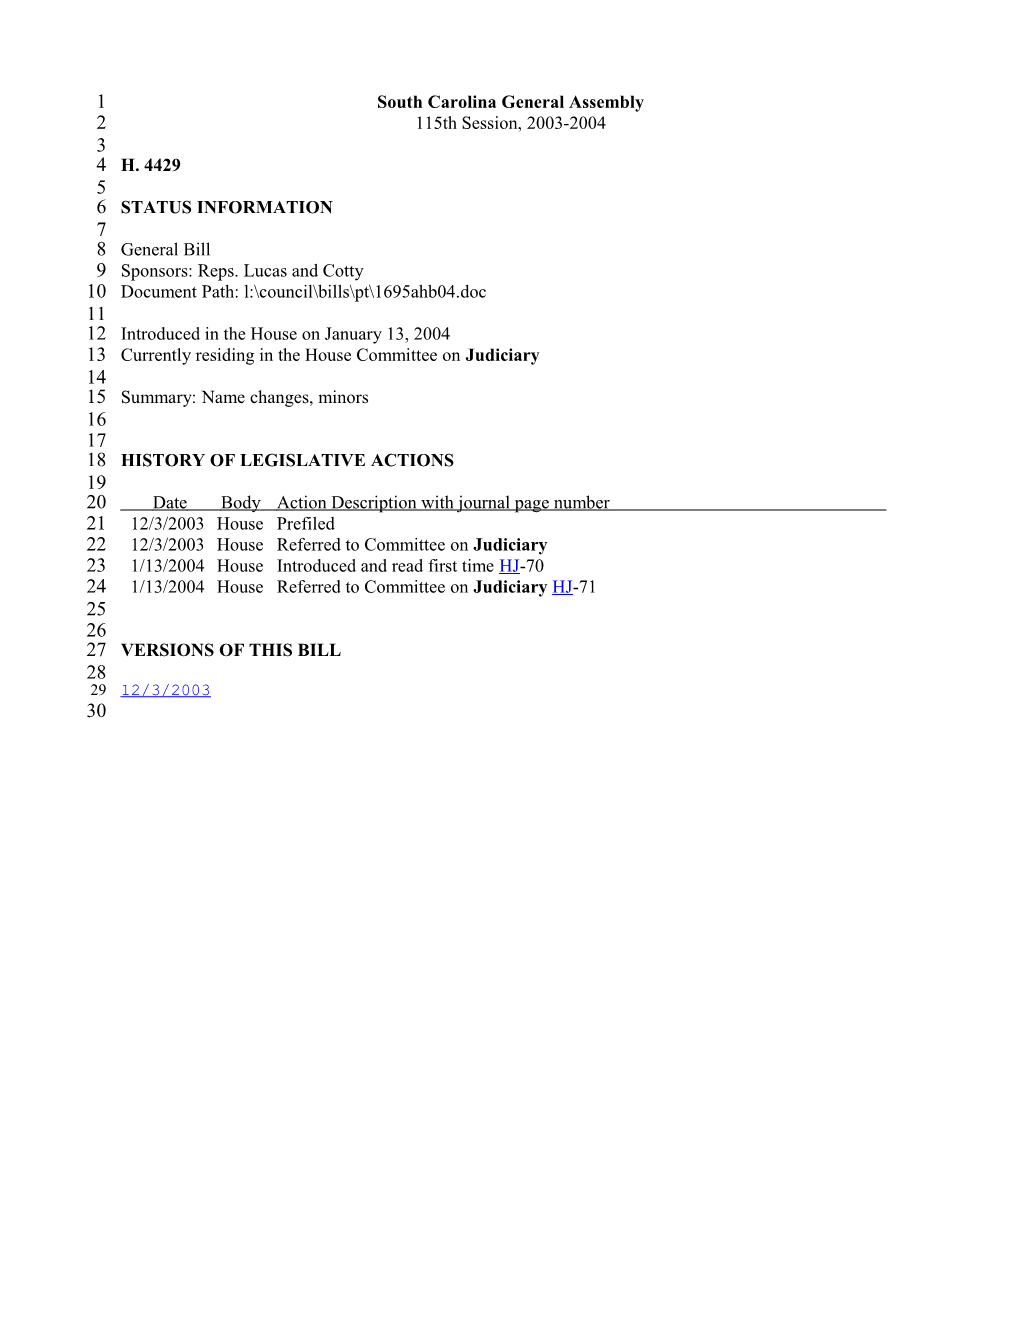 2003-2004 Bill 4429: Name Changes, Minors - South Carolina Legislature Online